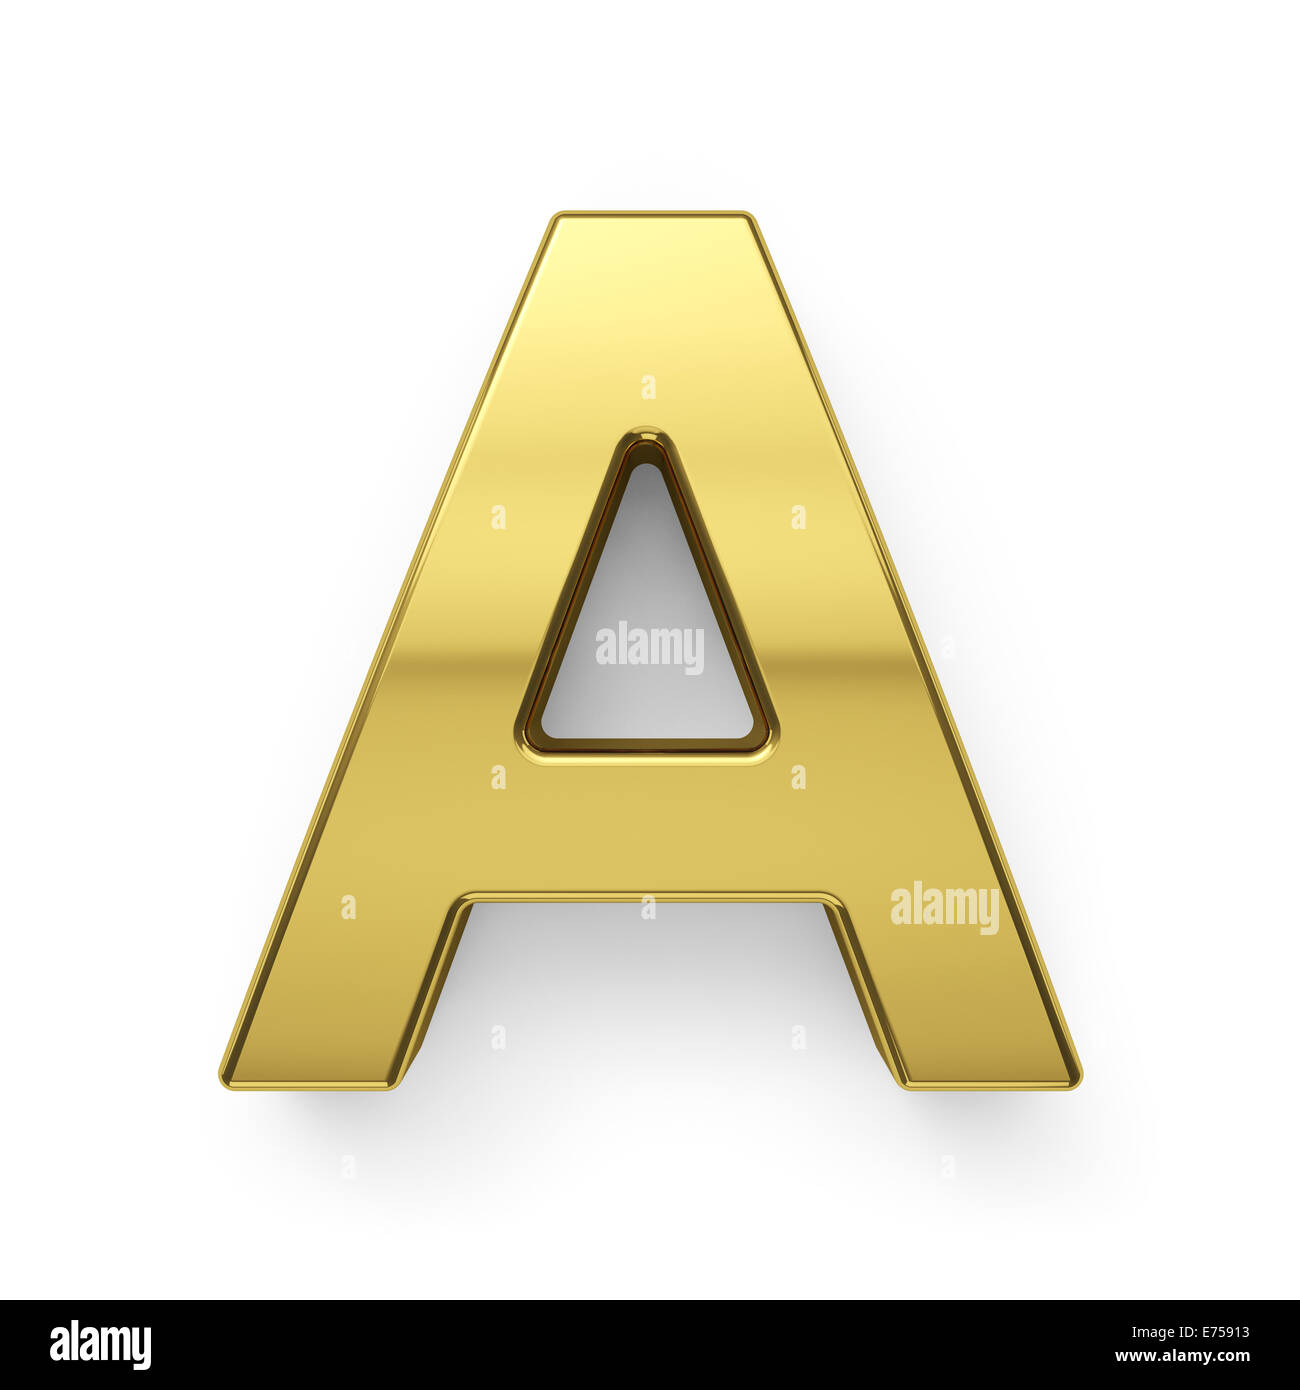 3d render of golden alphabet letter simbol - A. Isolated on white background Stock Photo